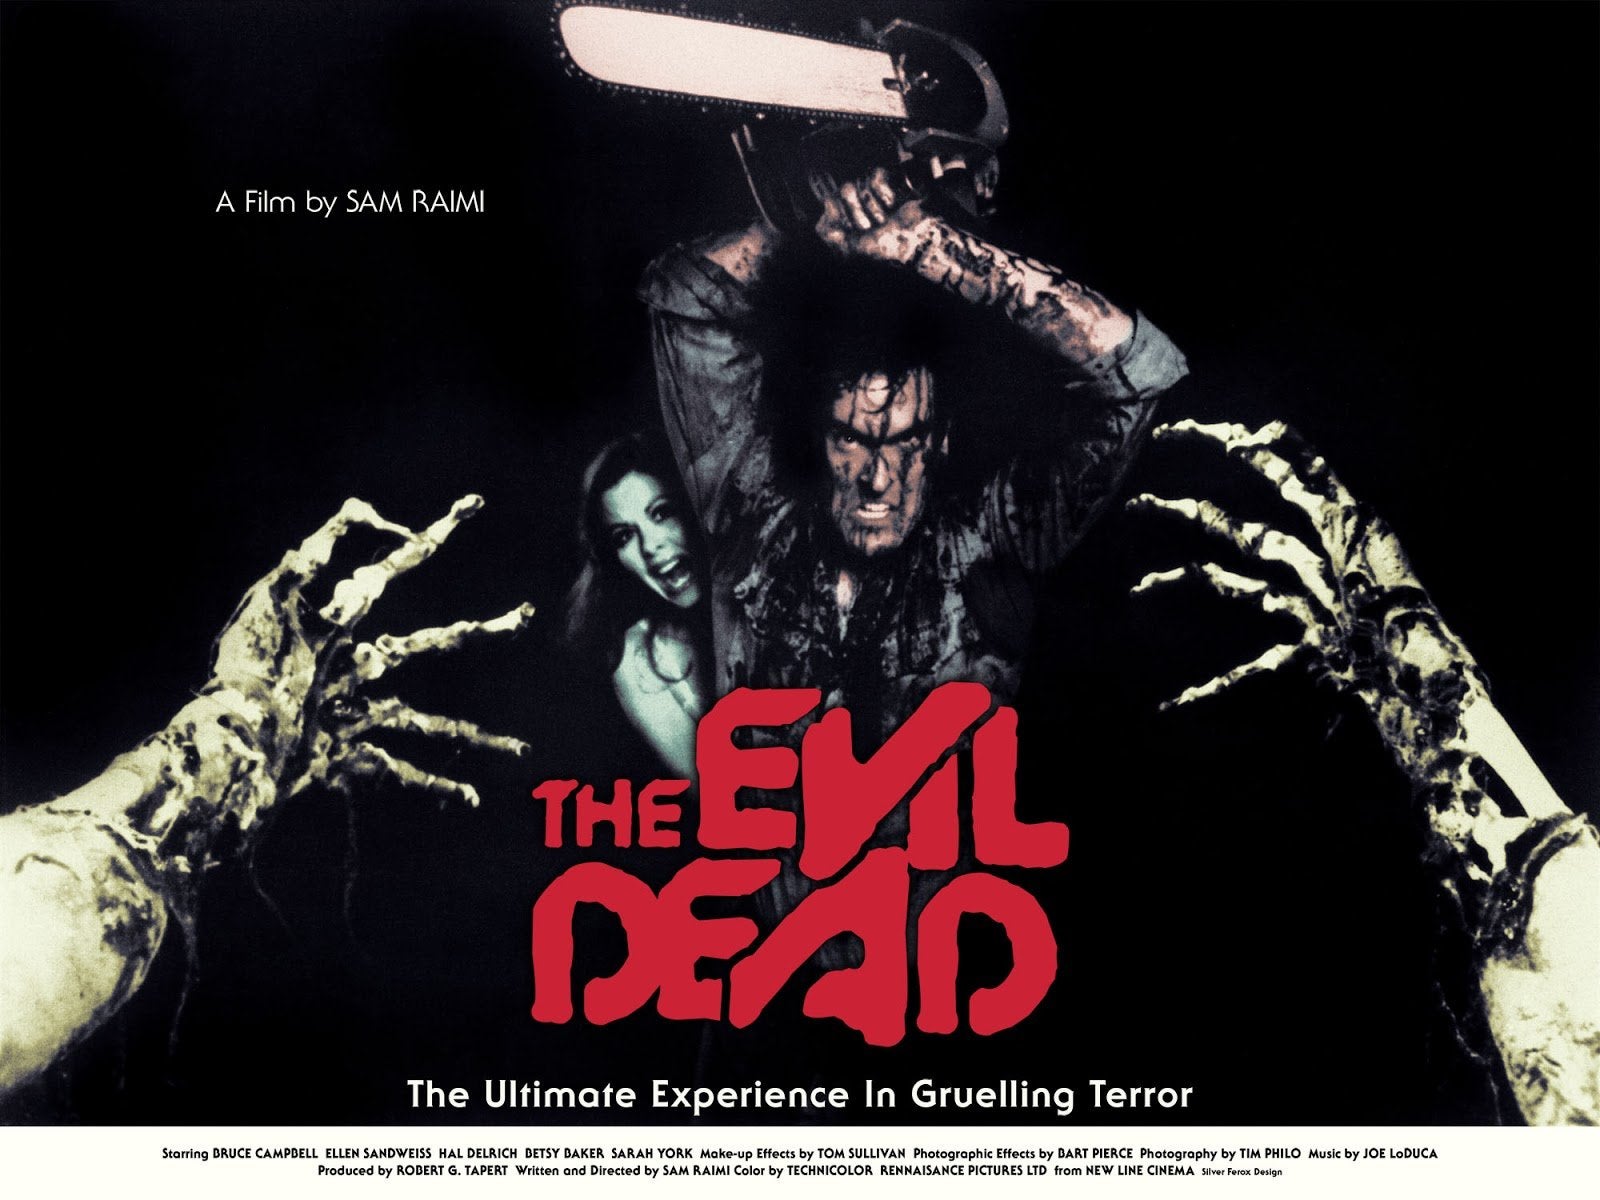 Evil Dead (1981) — Horror Film History